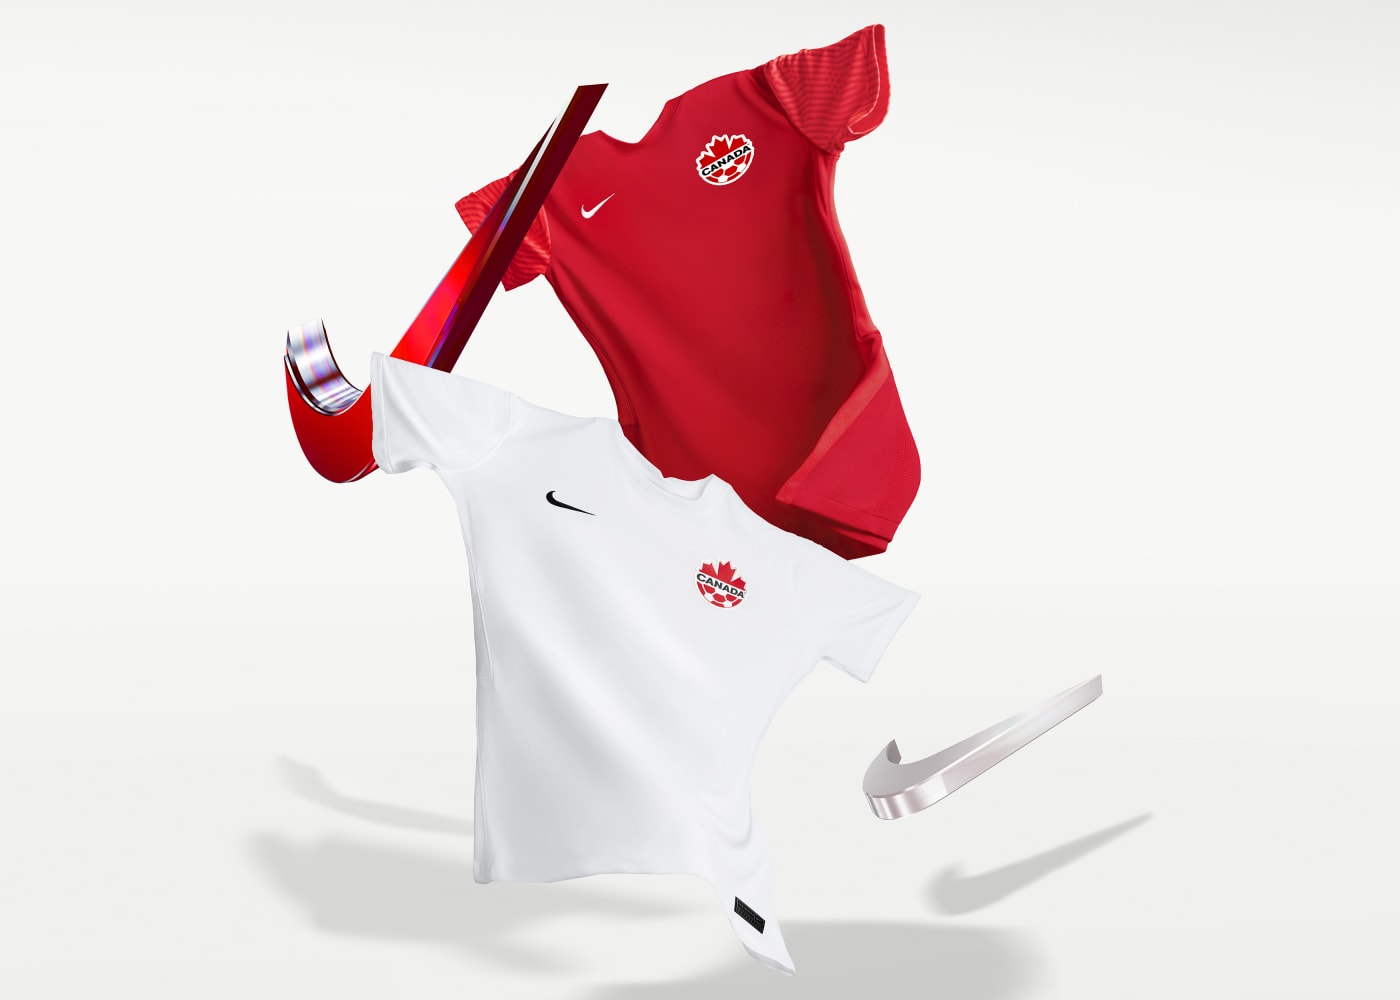 Not new Canada Men's National Team Nike Kits